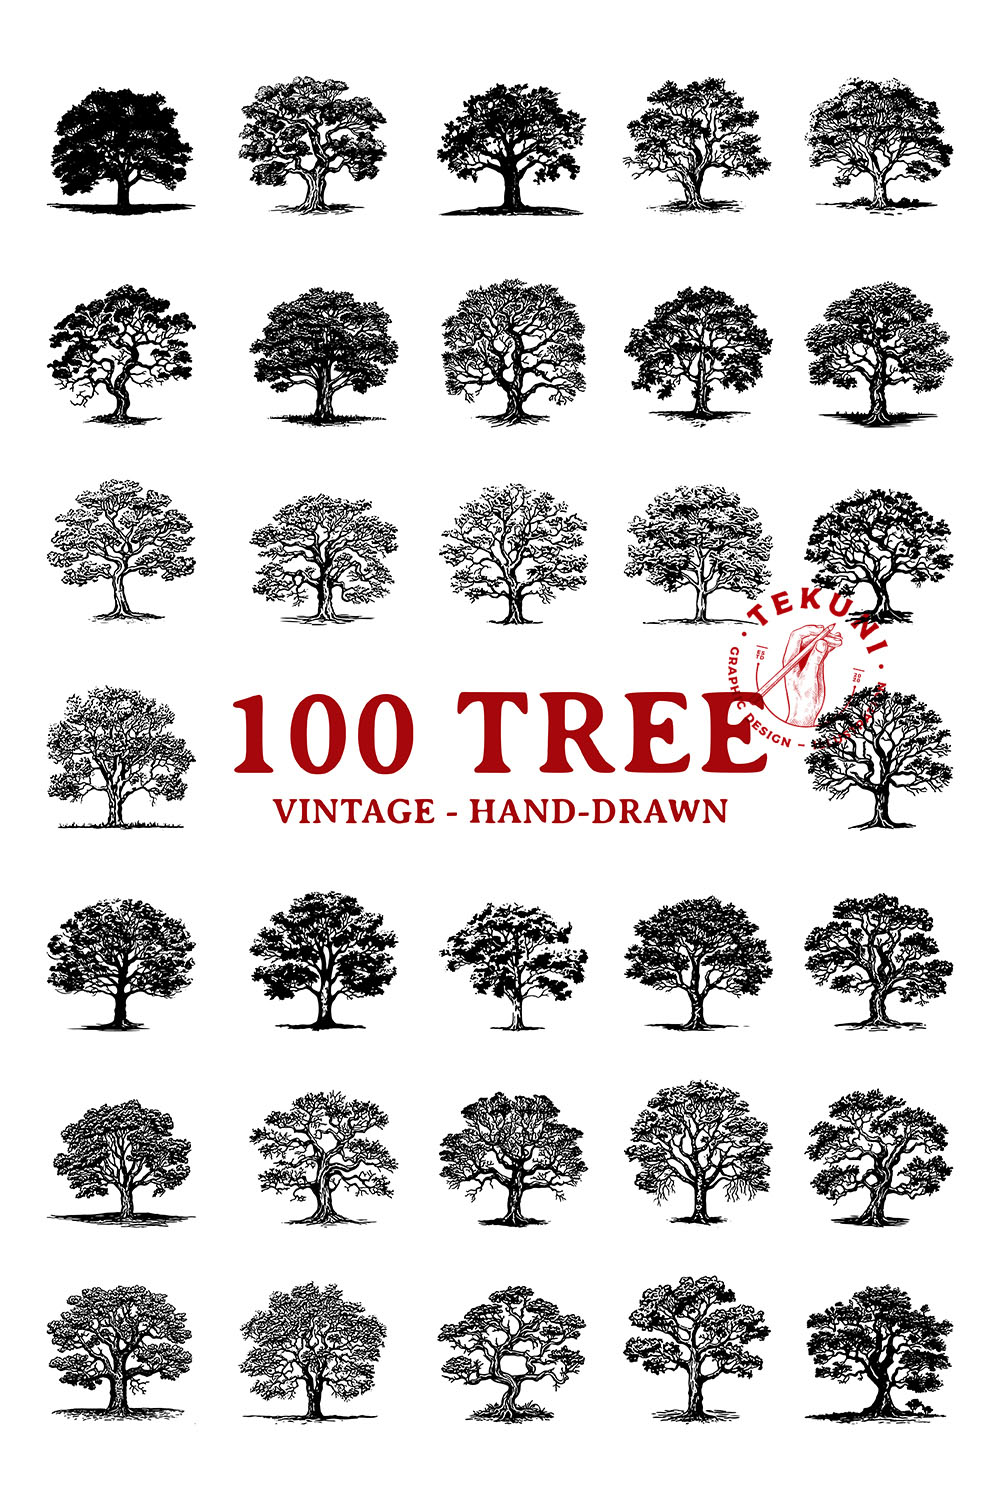 Tree SVG hand-drawn set, tree logo vintage pinterest preview image.